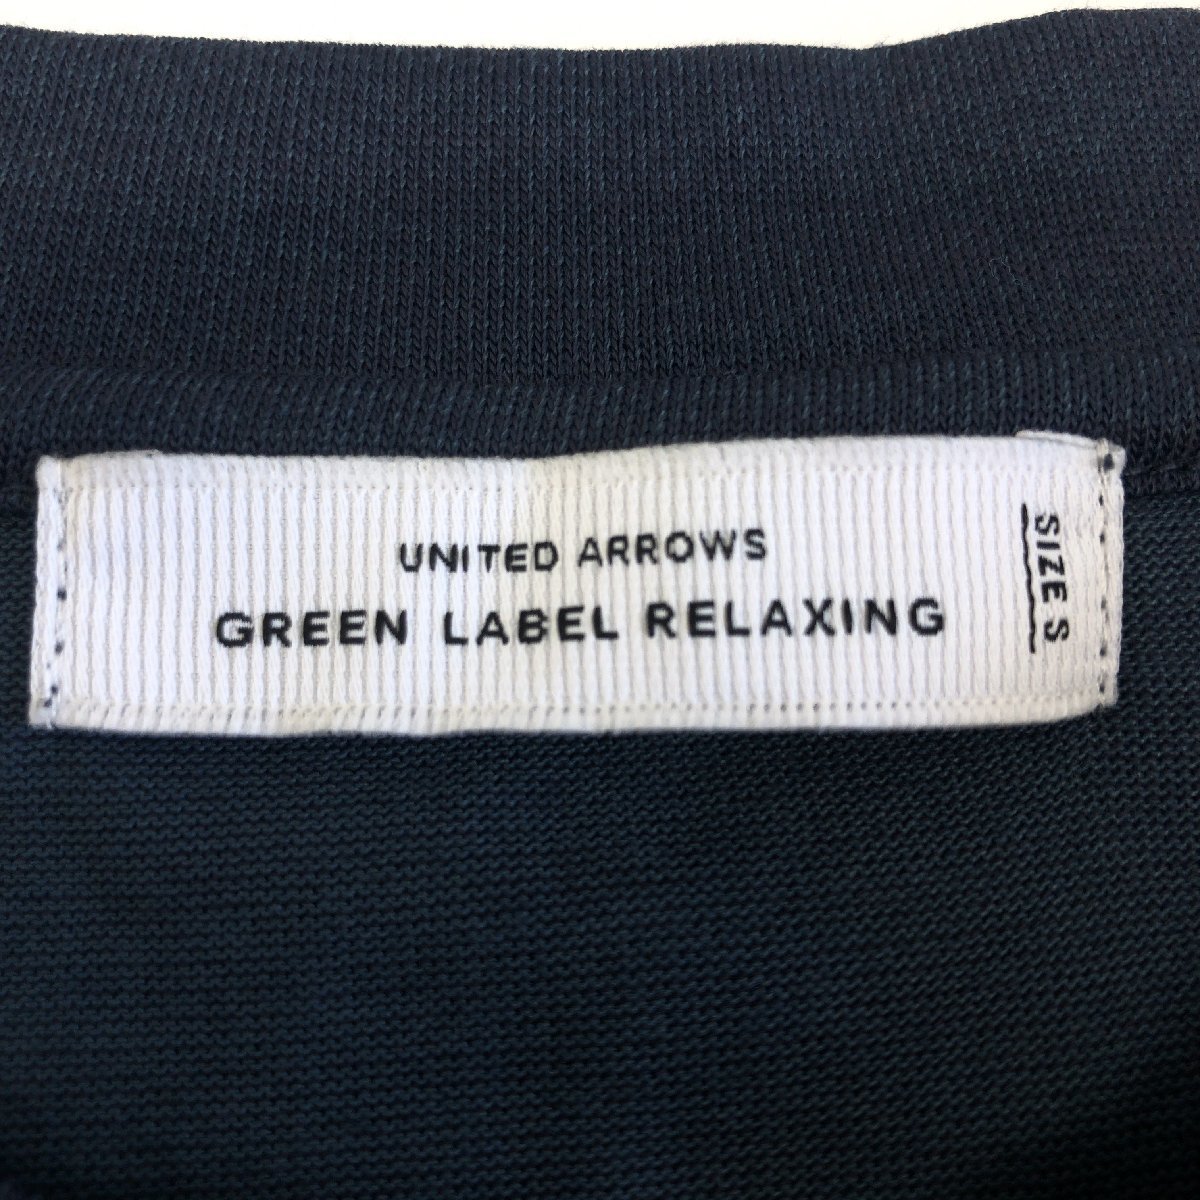 UNITED ARROWS GLR ユナイテッドアローズ 吸水速乾 ドライ Tシャツ S 紺 ネイビー 九分袖 長袖 ロンT 国内正規品 メンズ 紳士の画像3